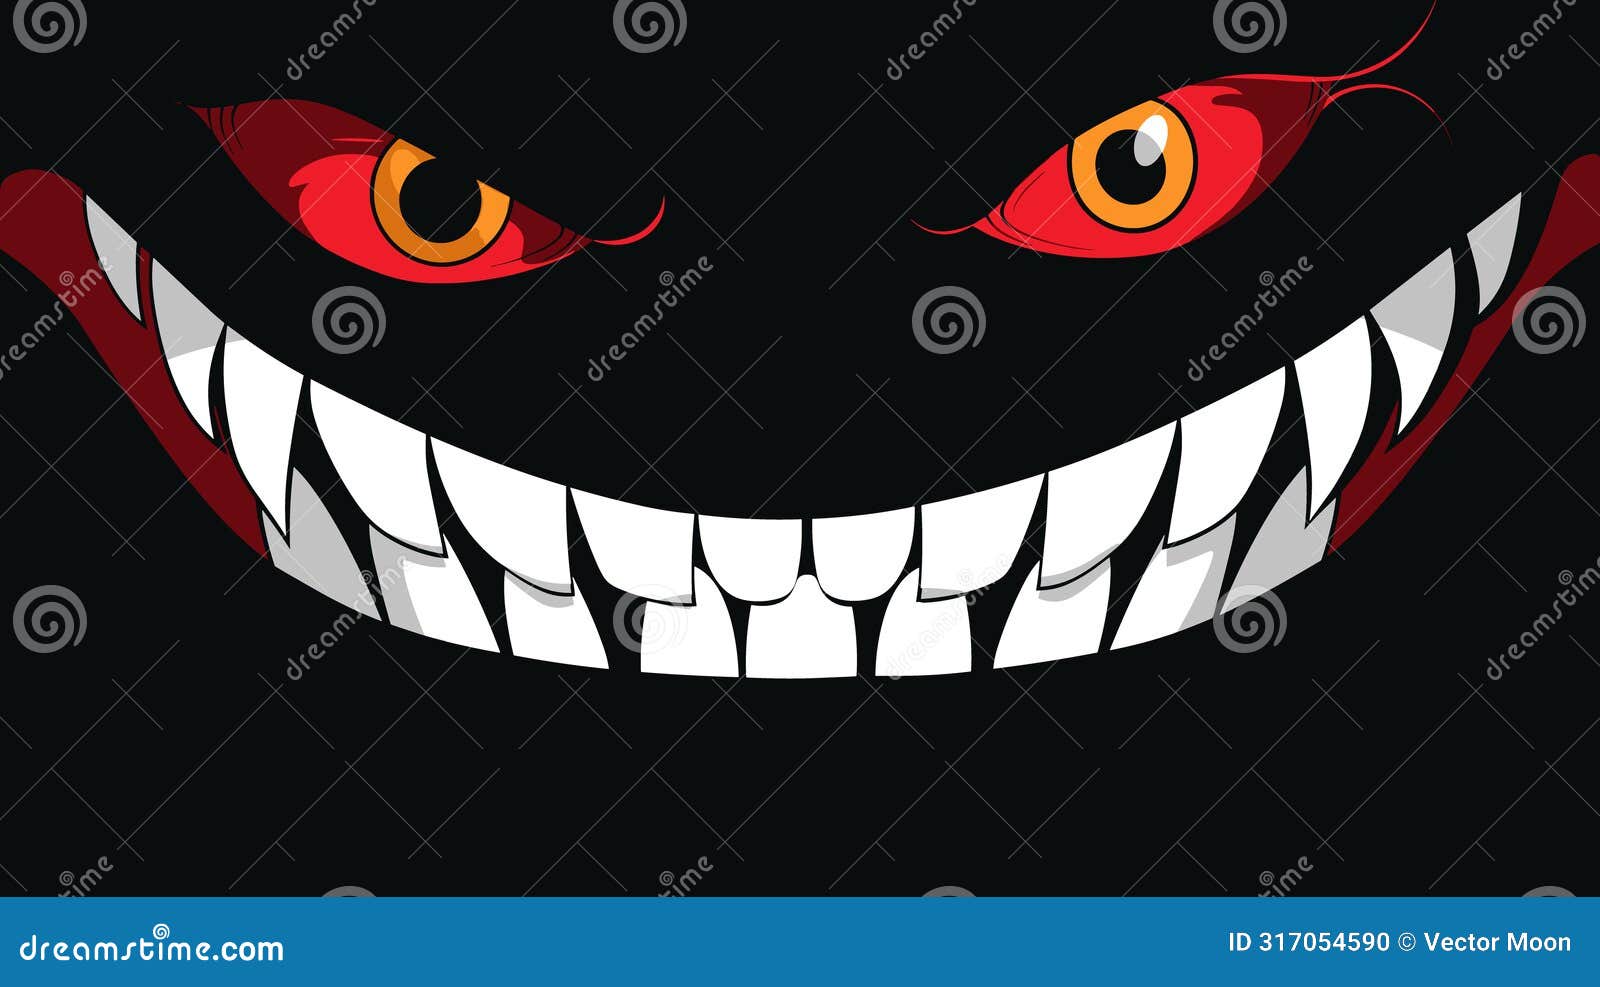 cheshire cat grin alice wonderland, digital art smiling cat. fierce cartoon cat smile, red eyes